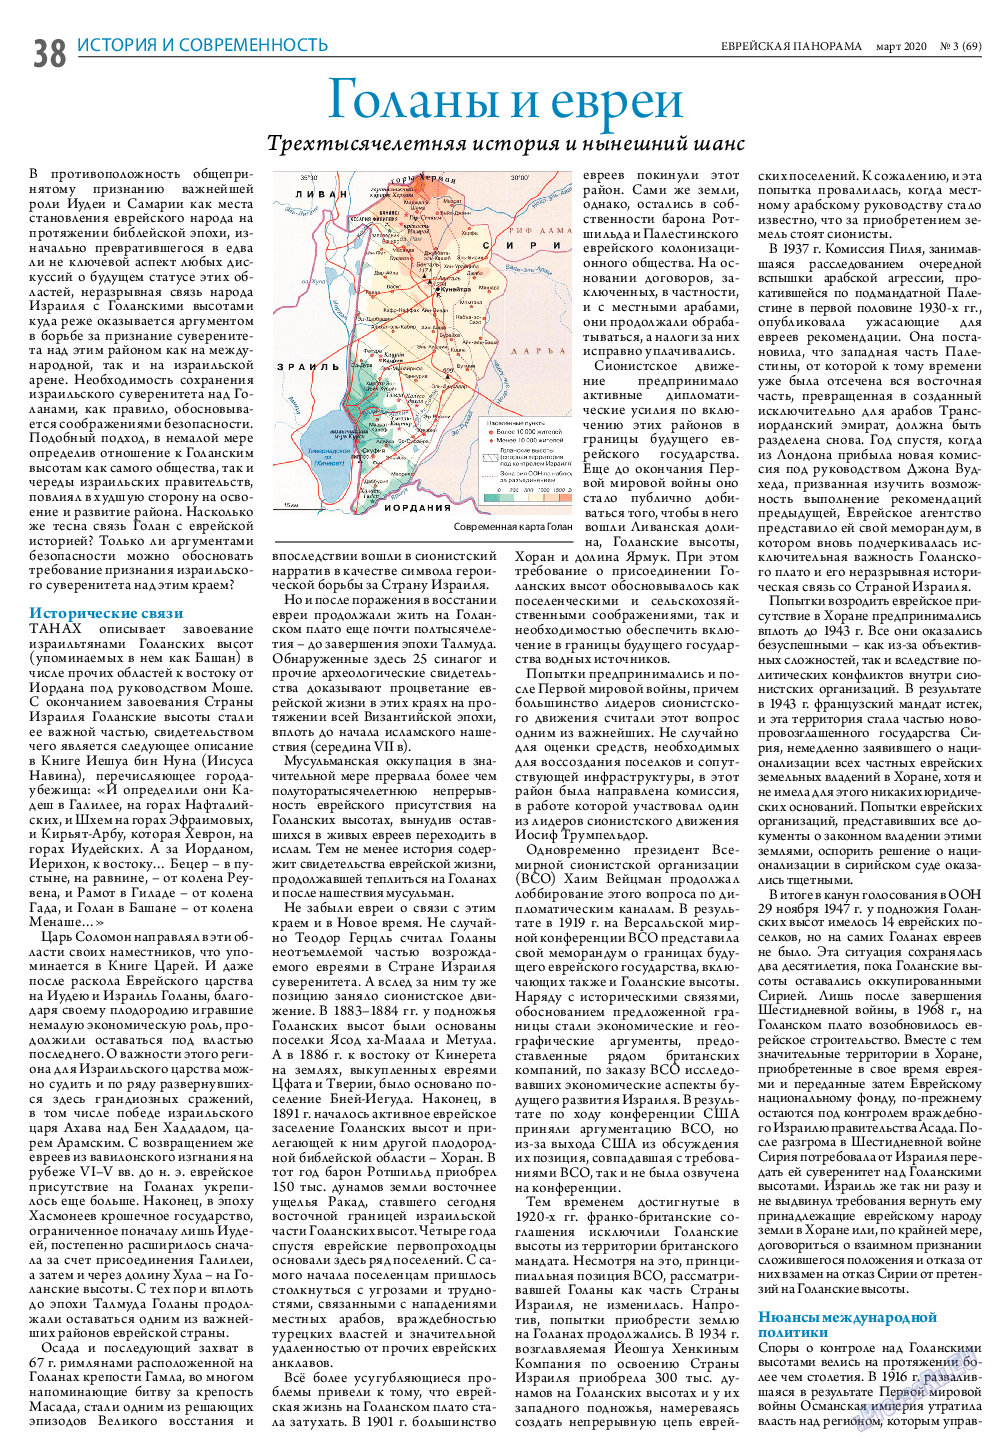 Еврейская панорама, газета. 2020 №3 стр.38